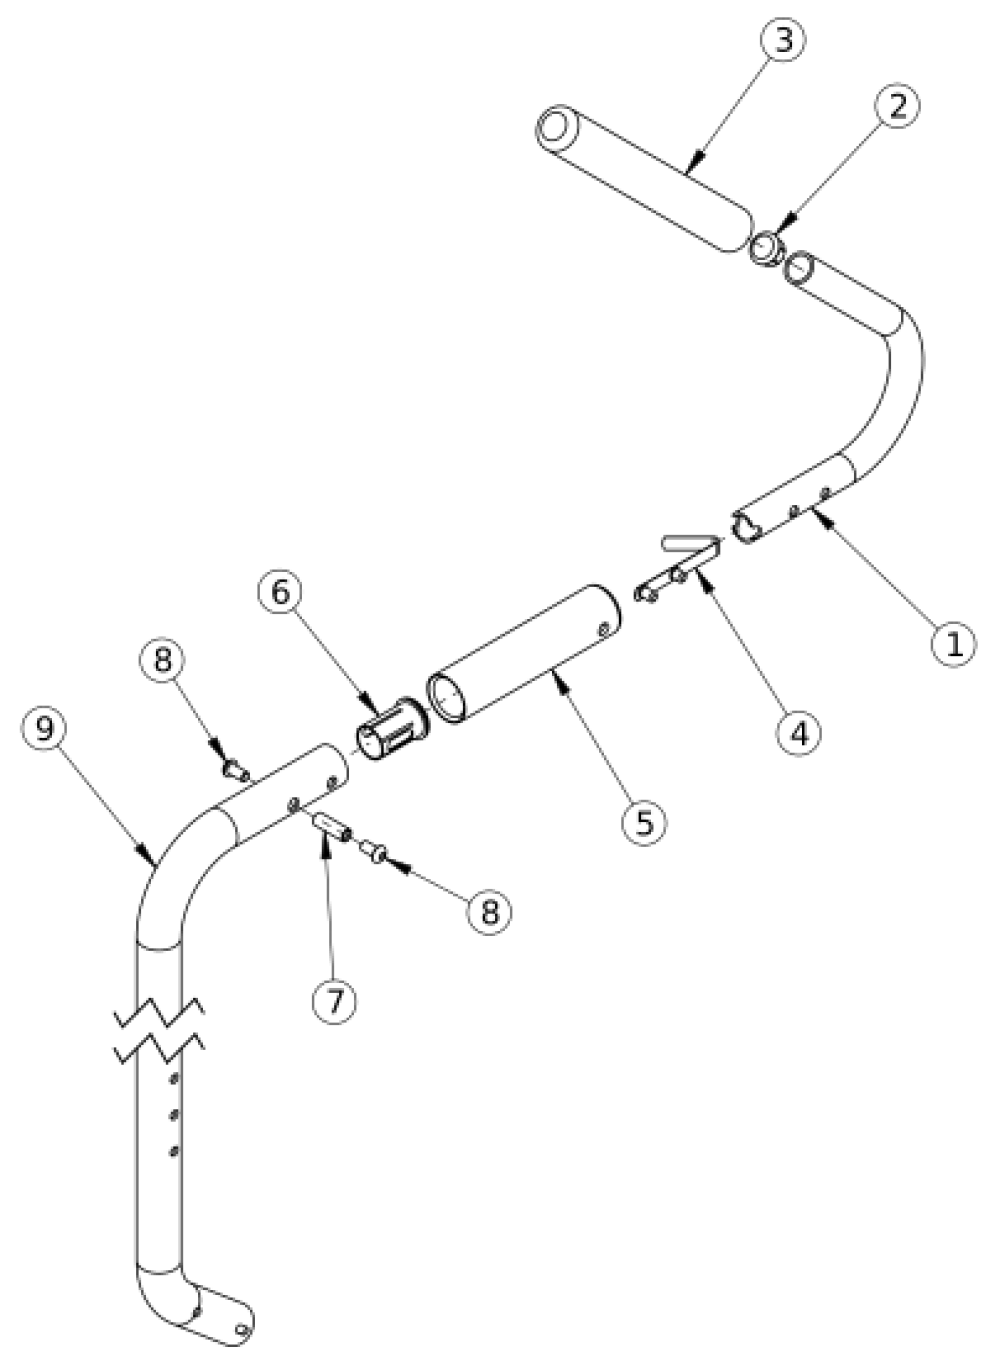 (discontinued) Catalyst Depth Adjustable Backrest Stroller Handle Extension parts diagram